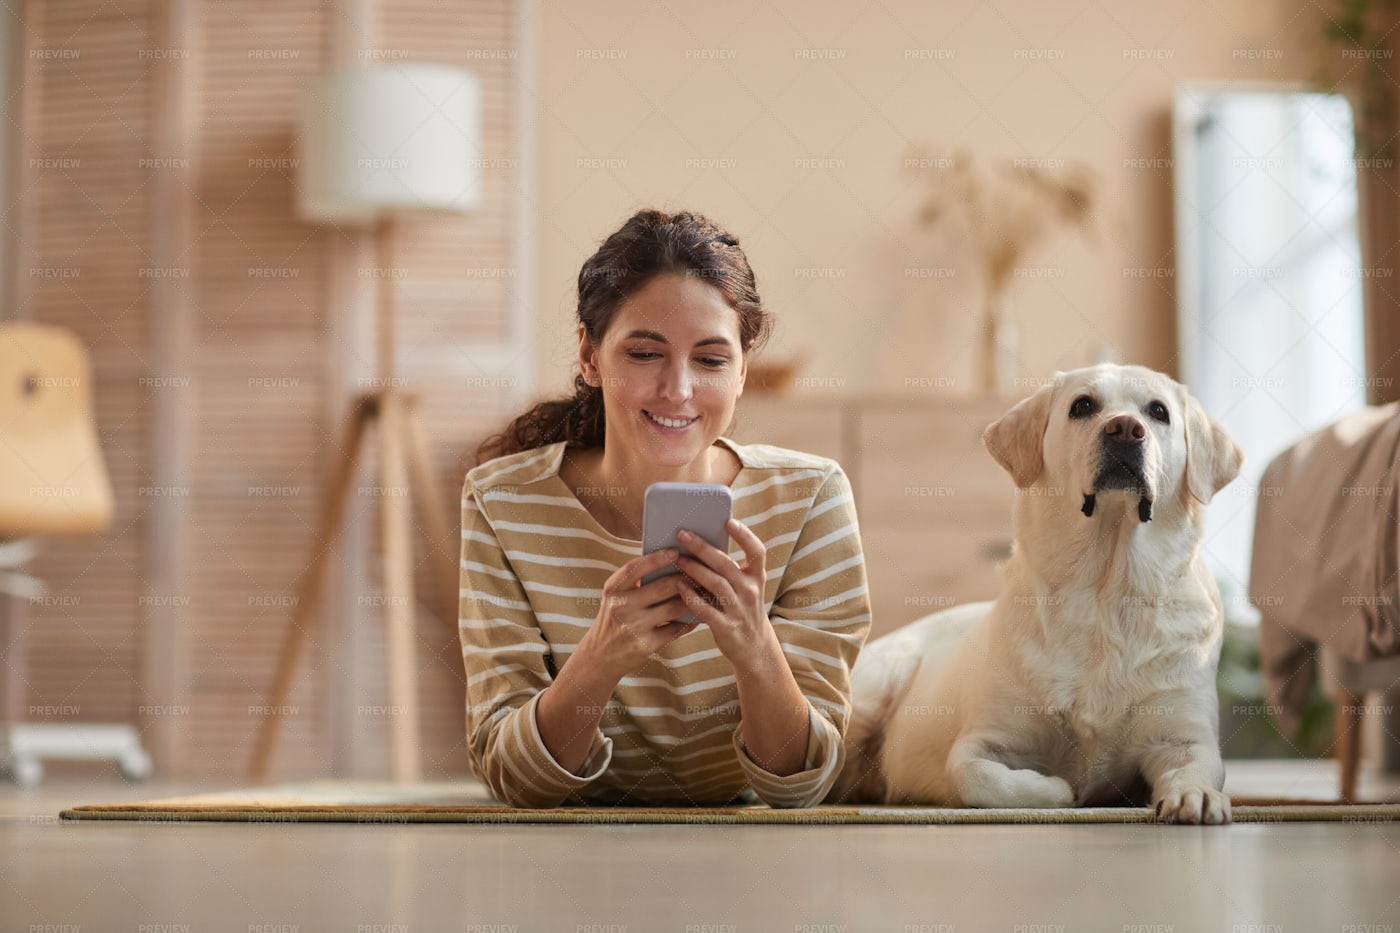 Texting Next To Dog: Stock Photos